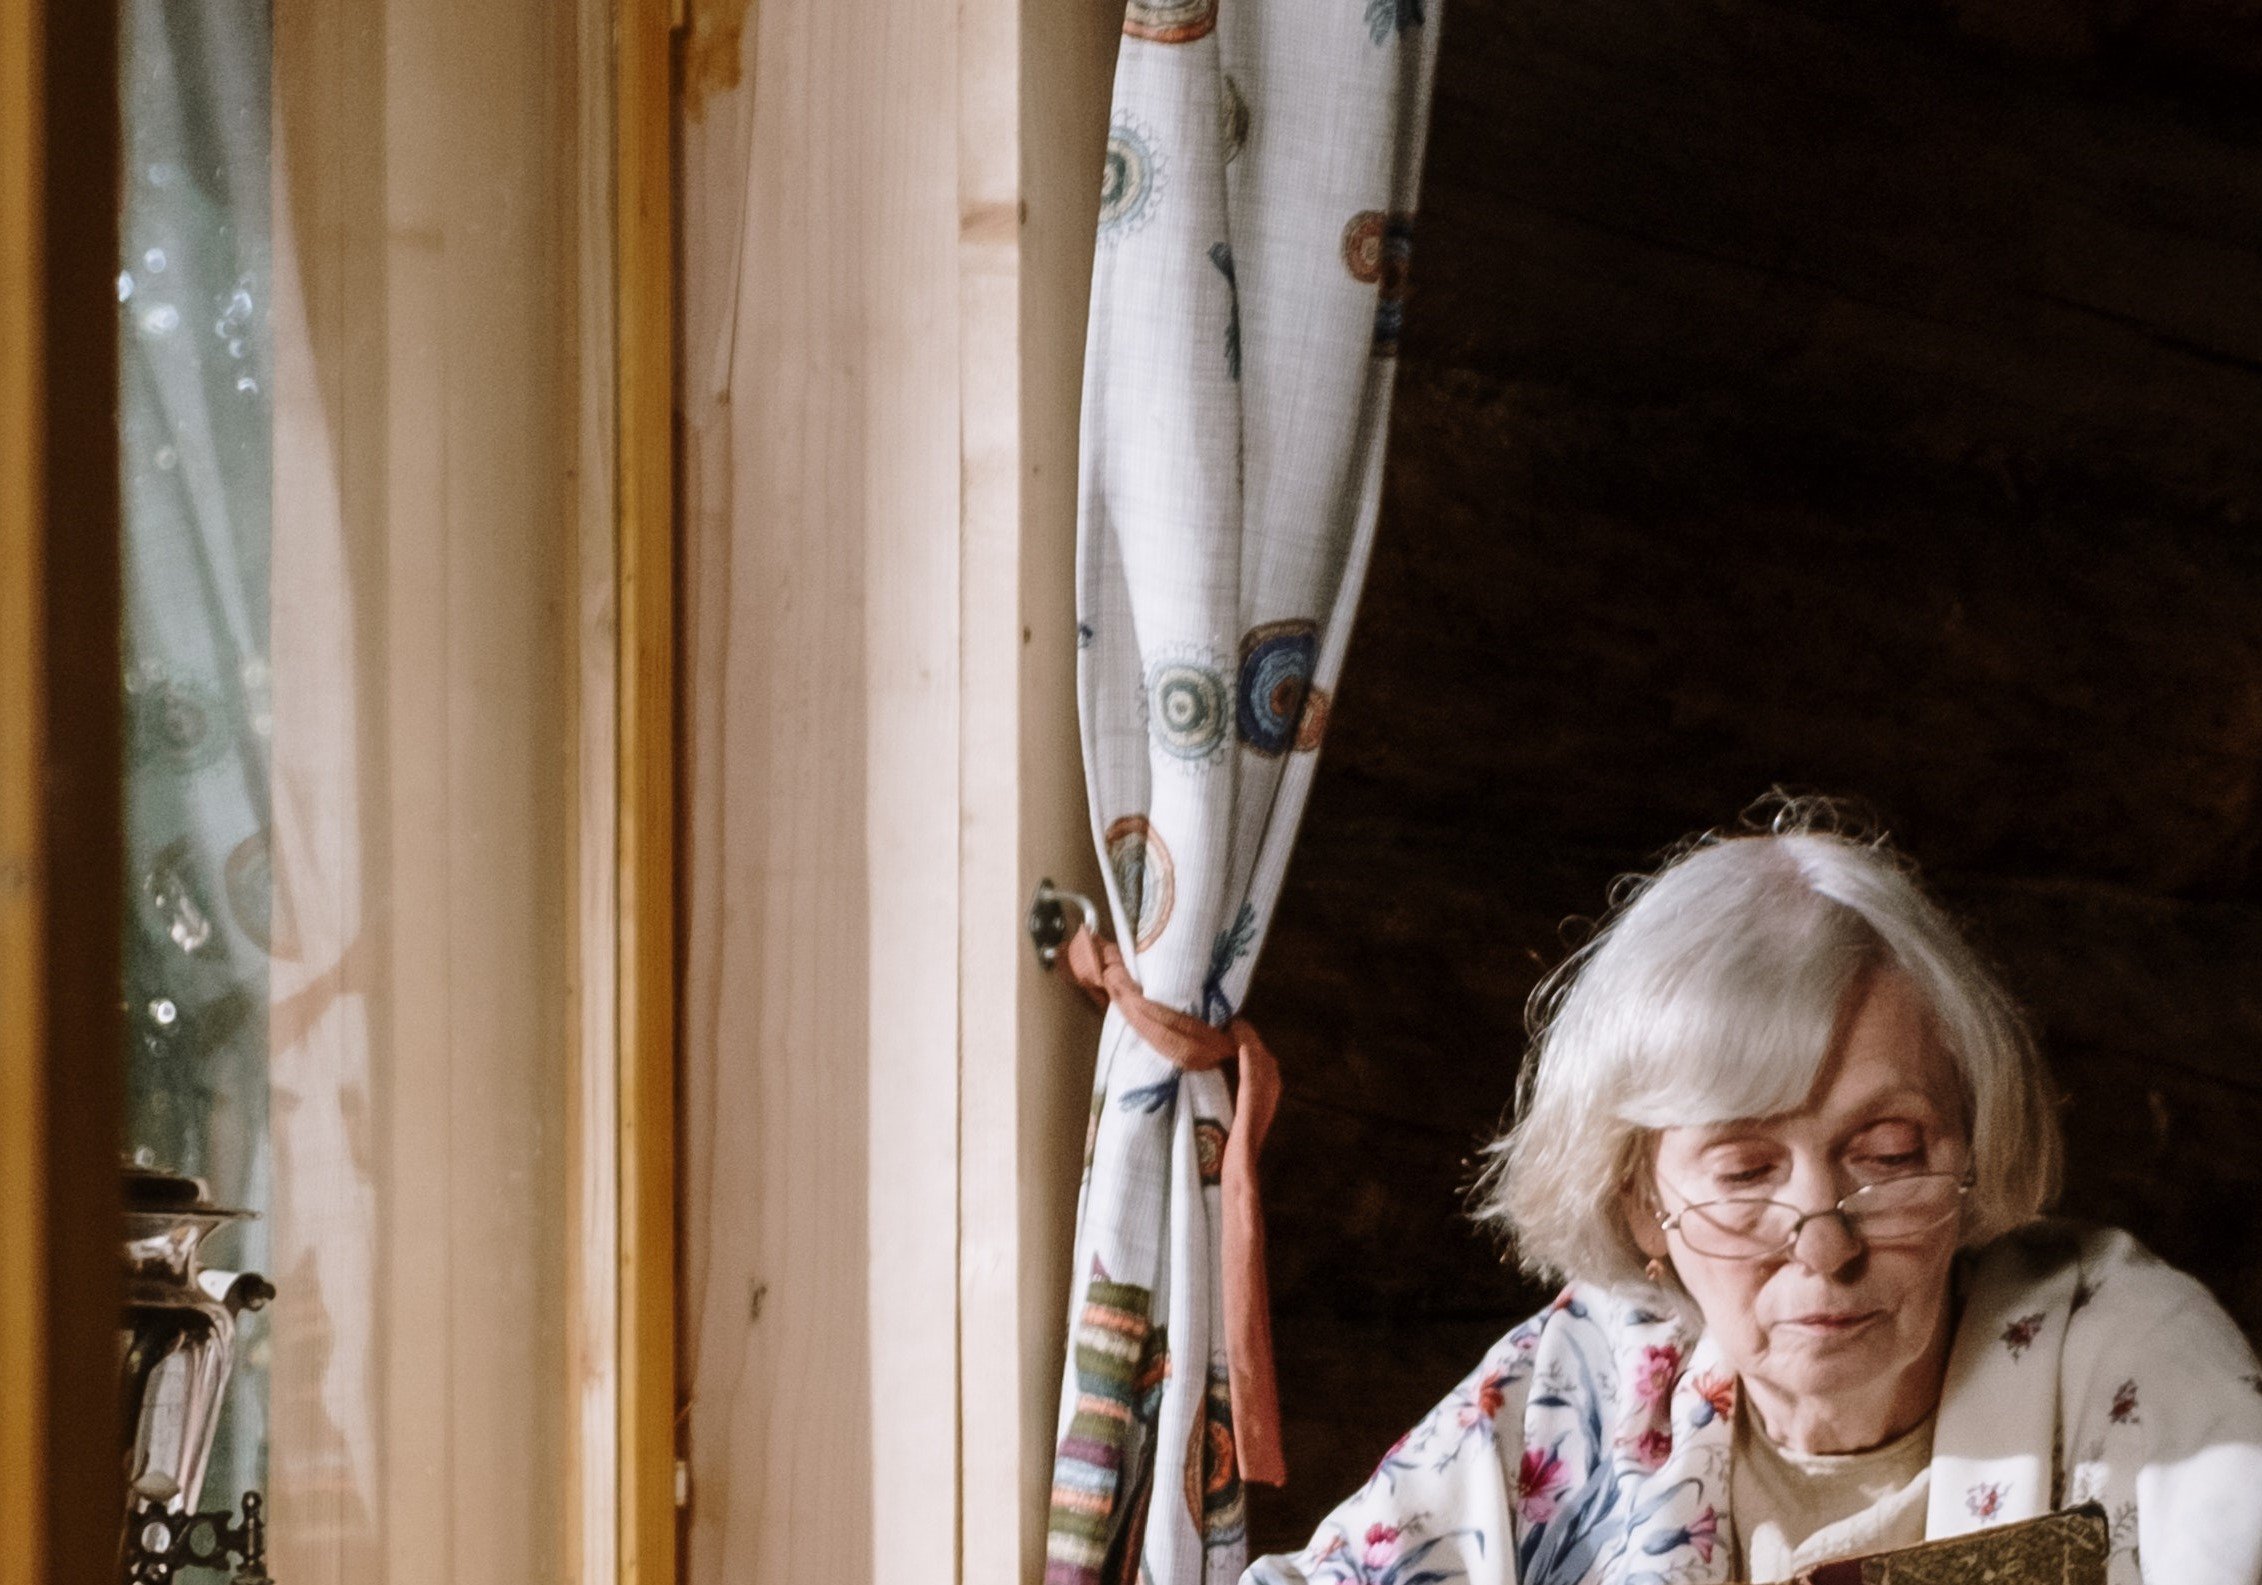 OP's grandma always countersigned her loan contracts | Photo: Pexels